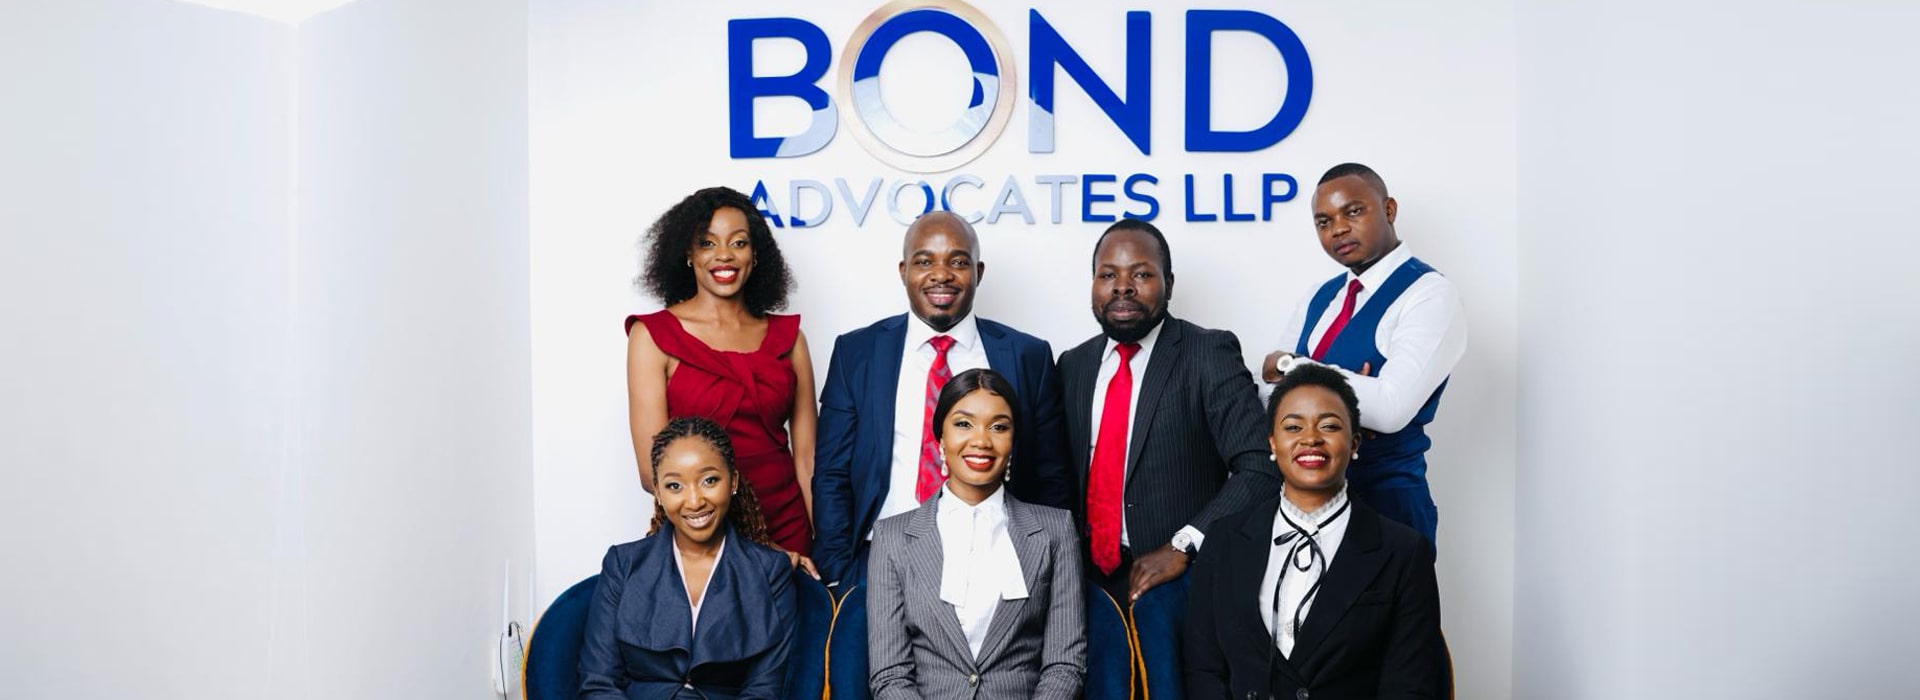 Bond-Advocates-LLP-team